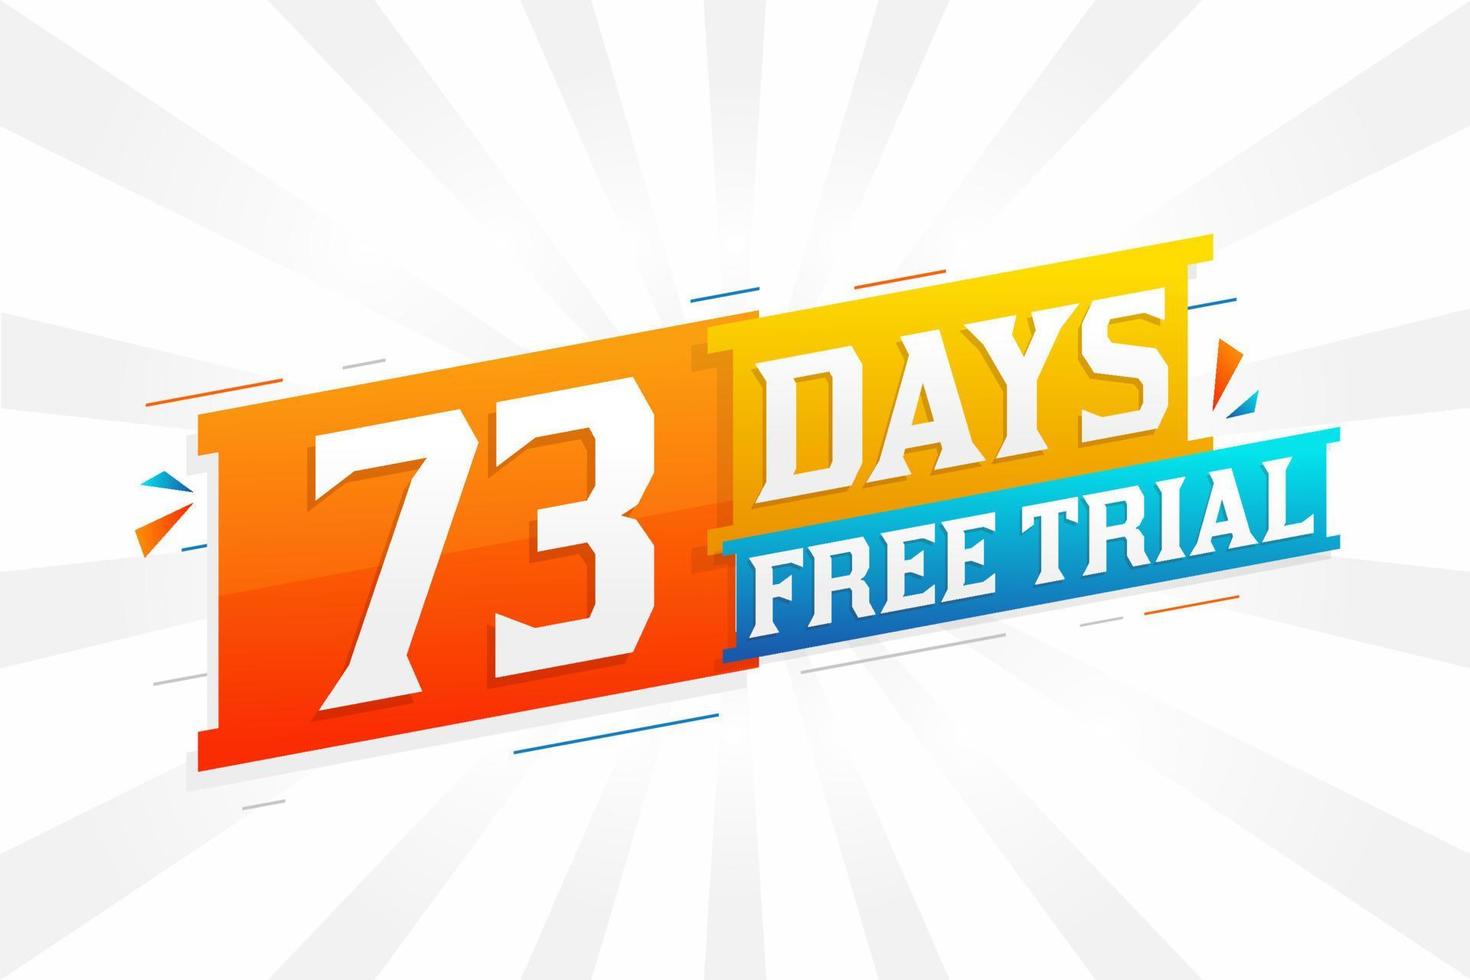 Vector de stock de texto en negrita promocional de prueba gratuita de 73 días